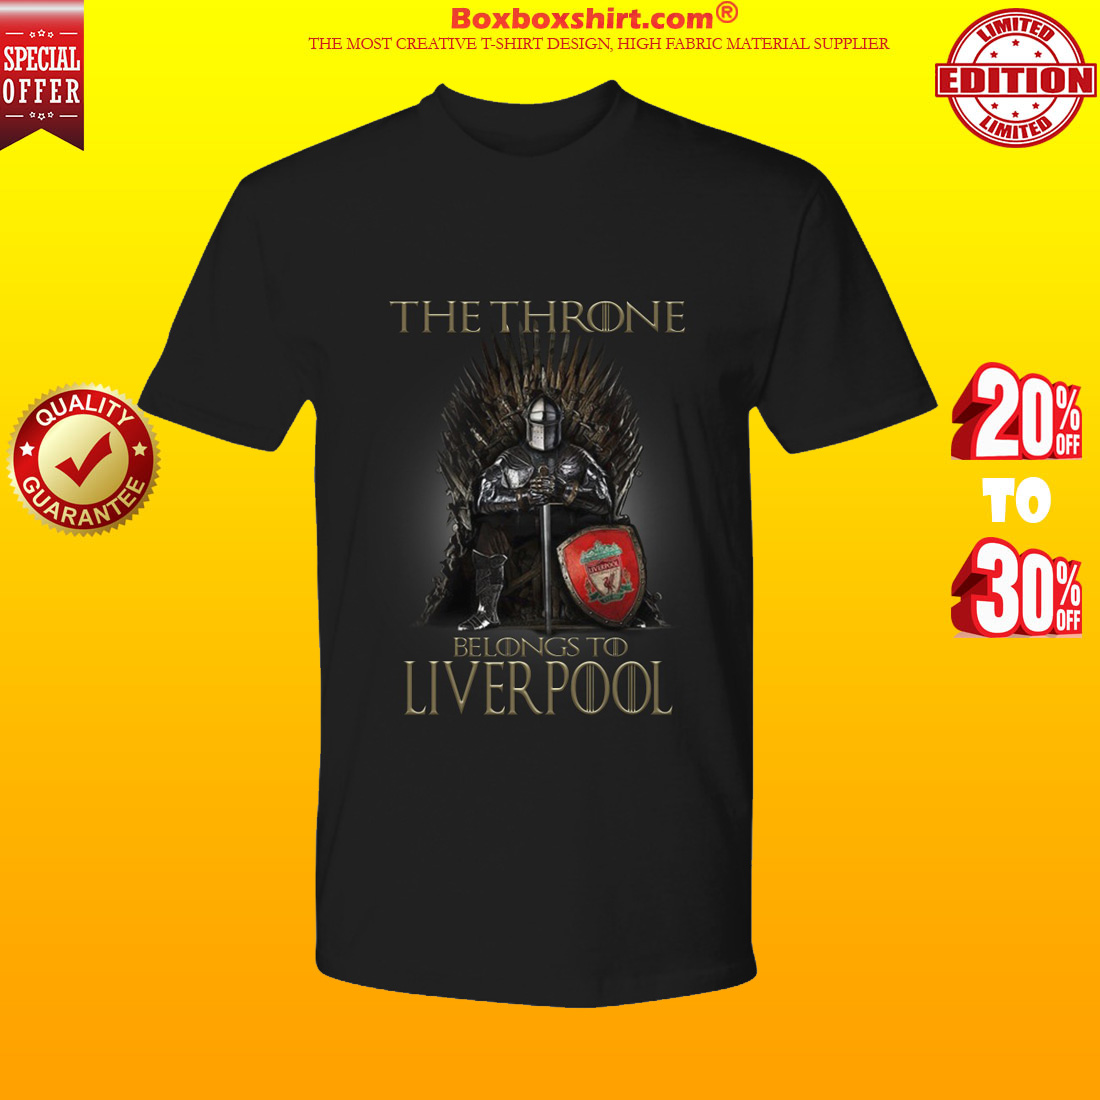 The Throne belongs to liverpool premium tee shirt